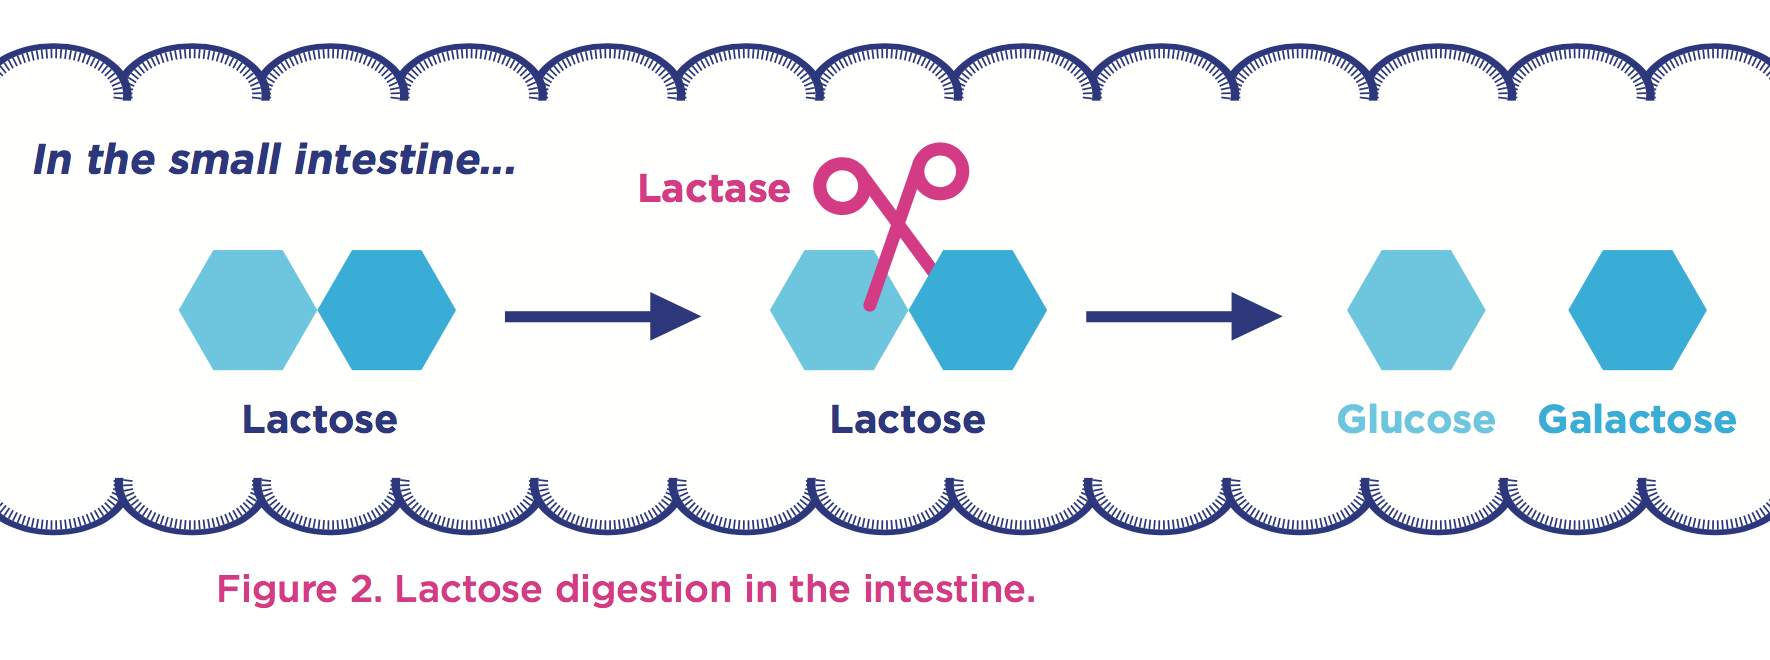 lactose-wgo-intestine-glucose-galactose